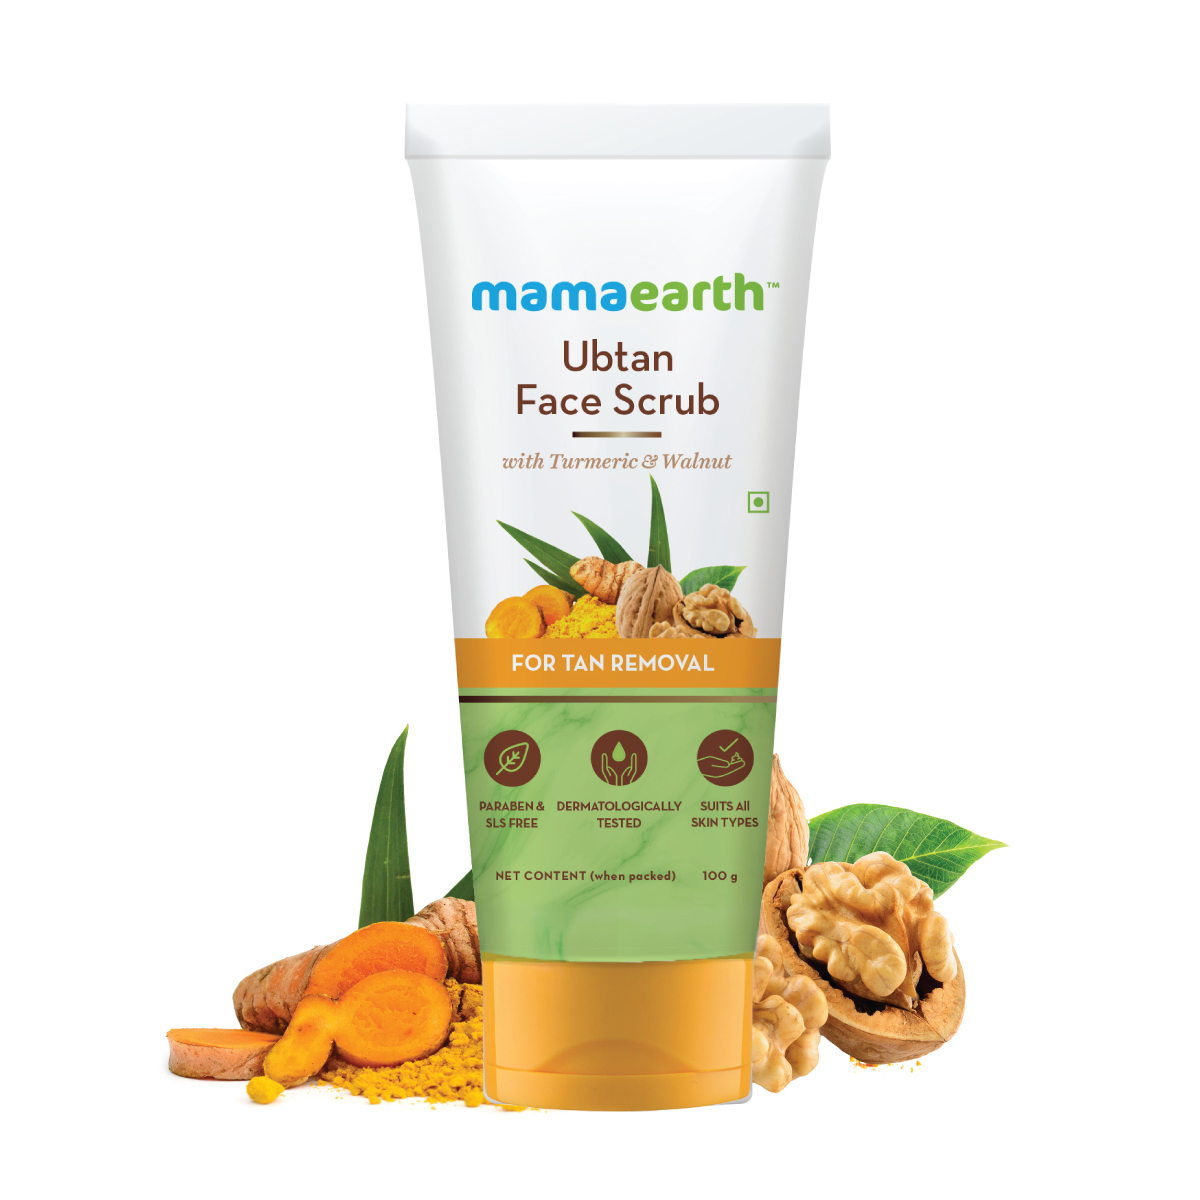 MamaEarth Ubtan Face Scrub with Turmeric & Walnut for Tan Removal